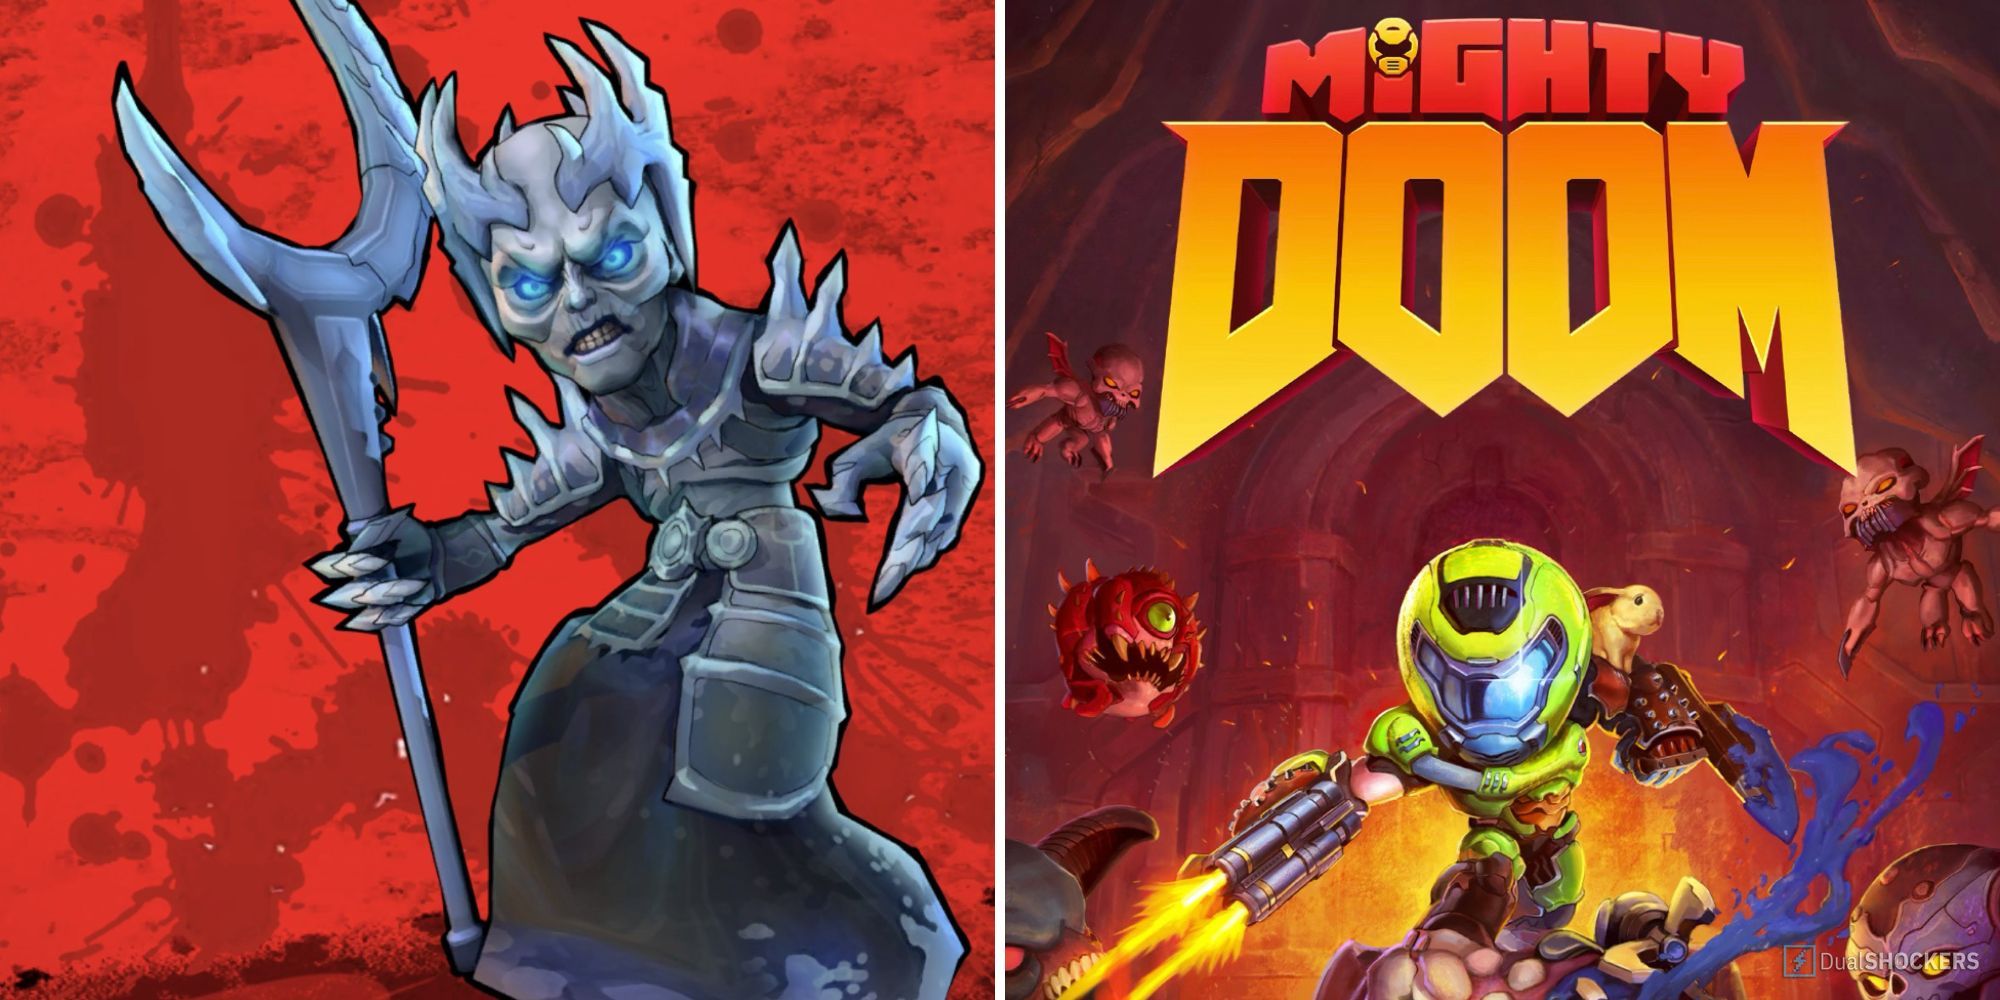 Mighty DOOM Hell Priest Boss, Doom Slayer with Mighty DOOM title